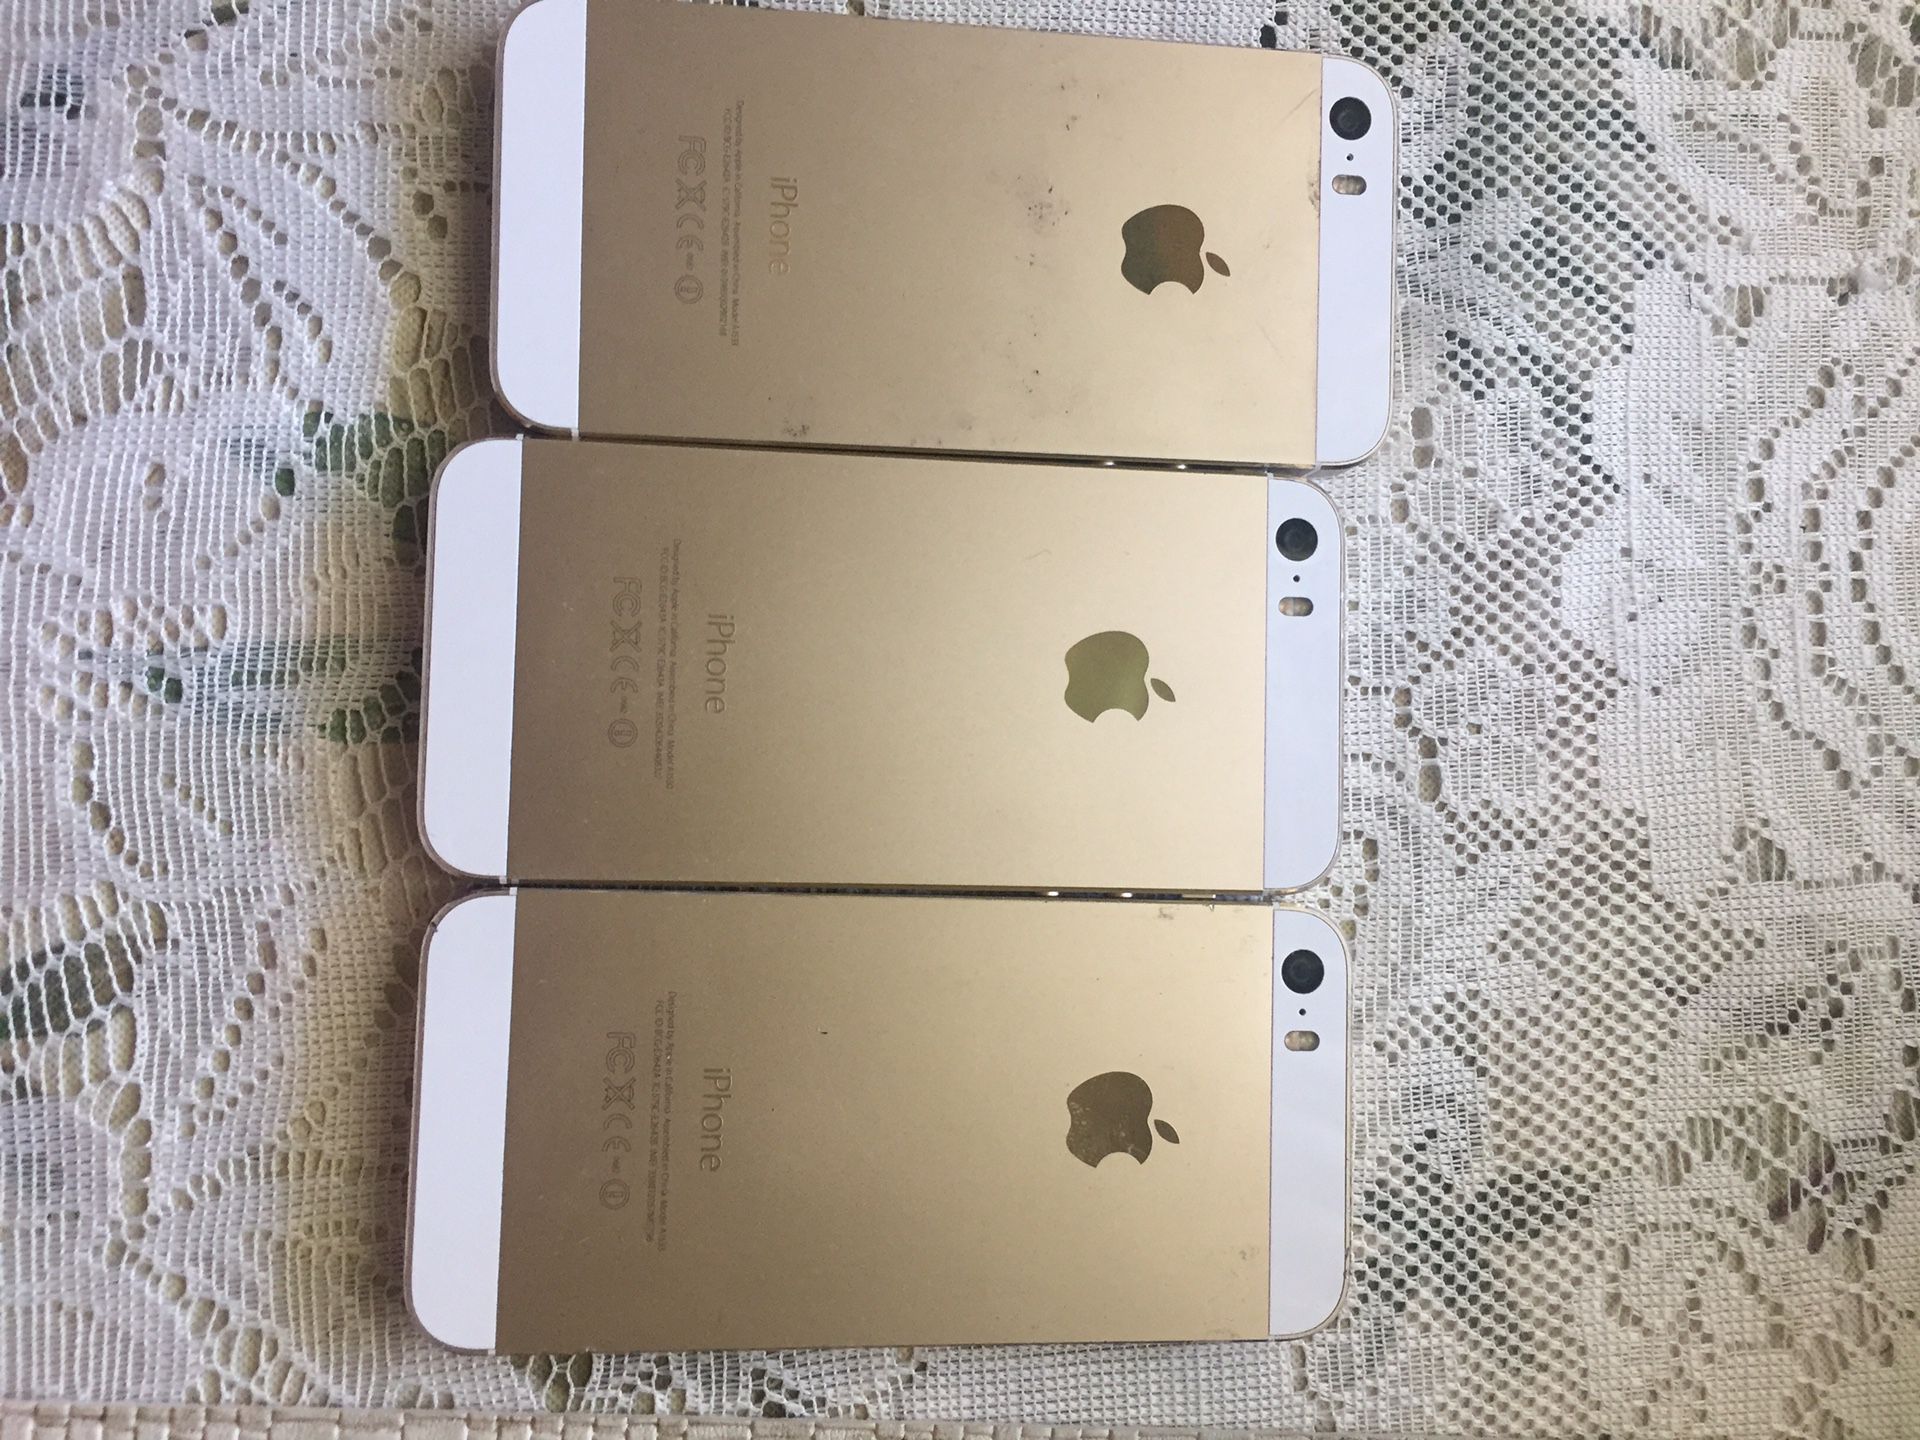 iPhone 5/5s/6 Unlocked $75-$199